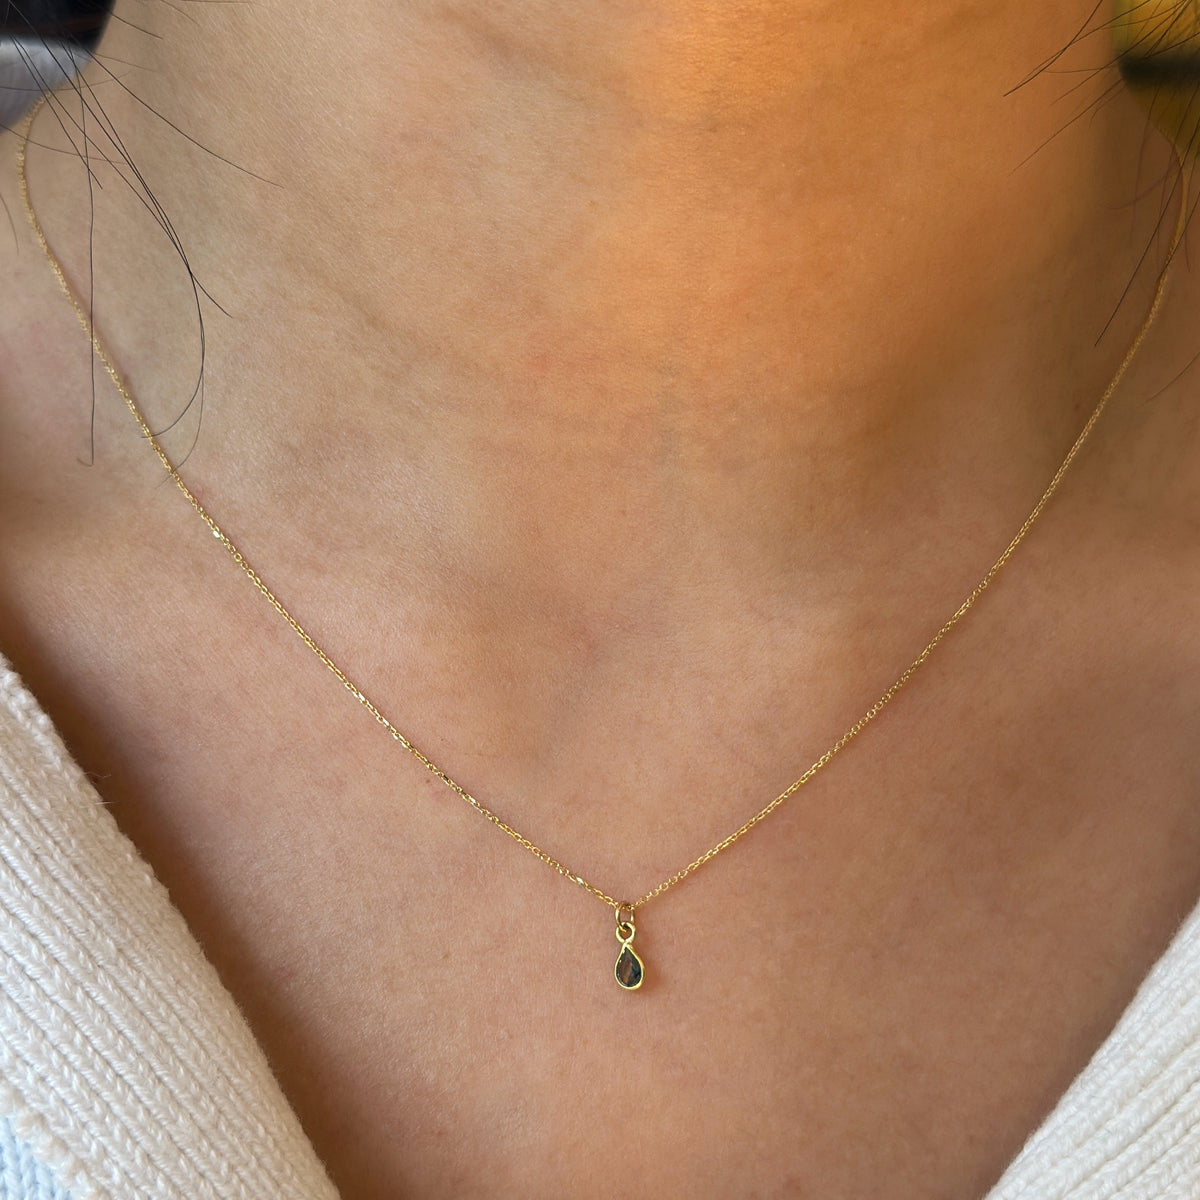 Amelie necklace